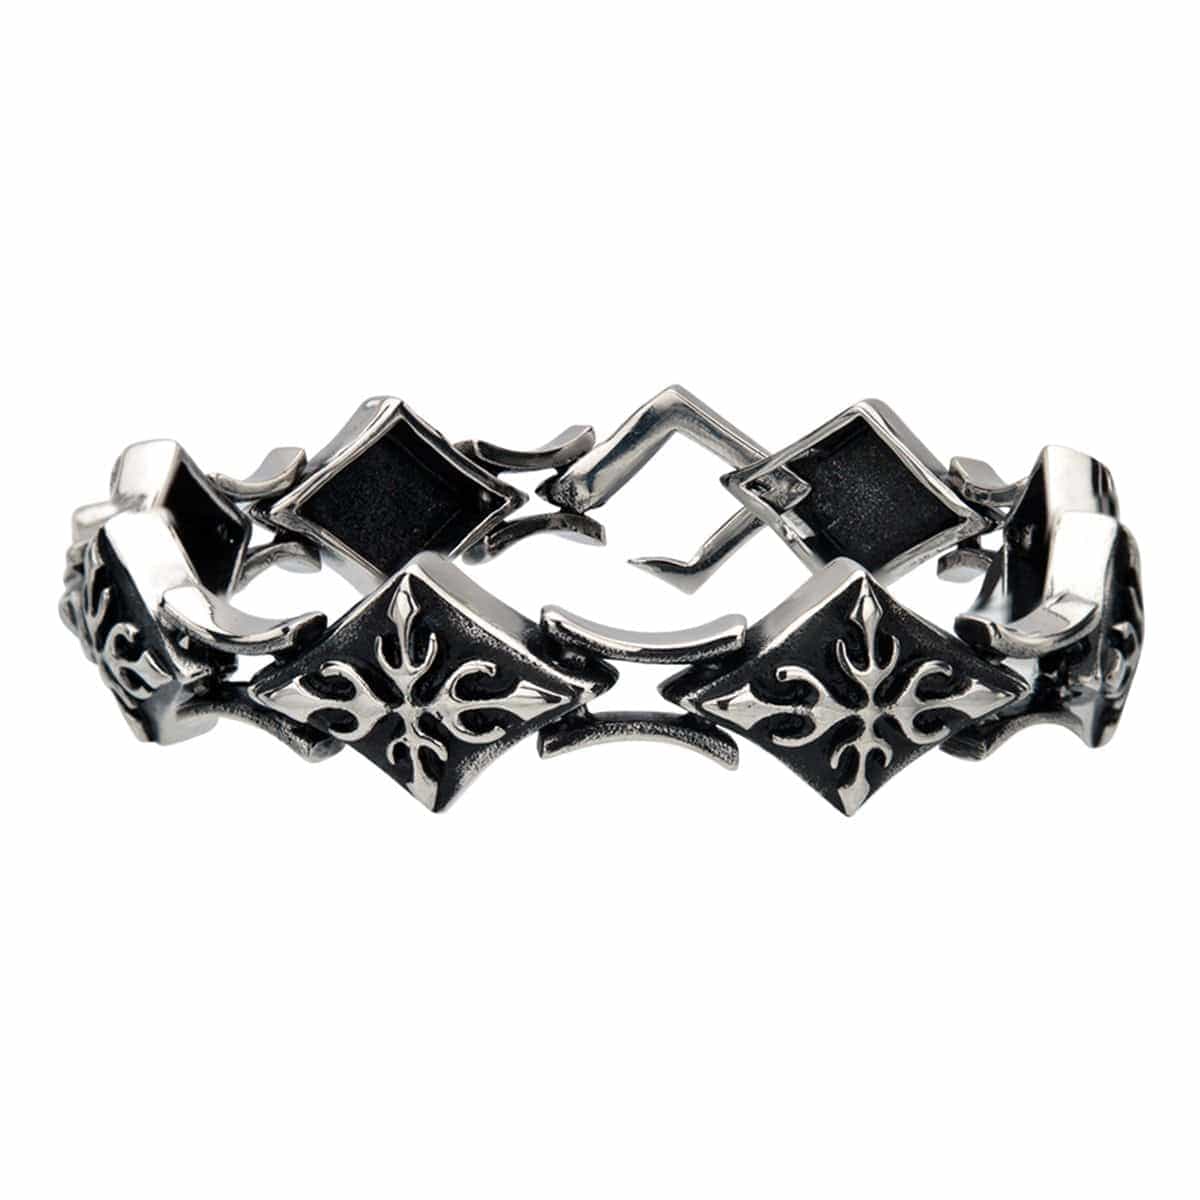 INOX JEWELRY Bracelets Antiqued Silver Tone Stainless Steel with Diamond Pattern Links Bracelet BR04